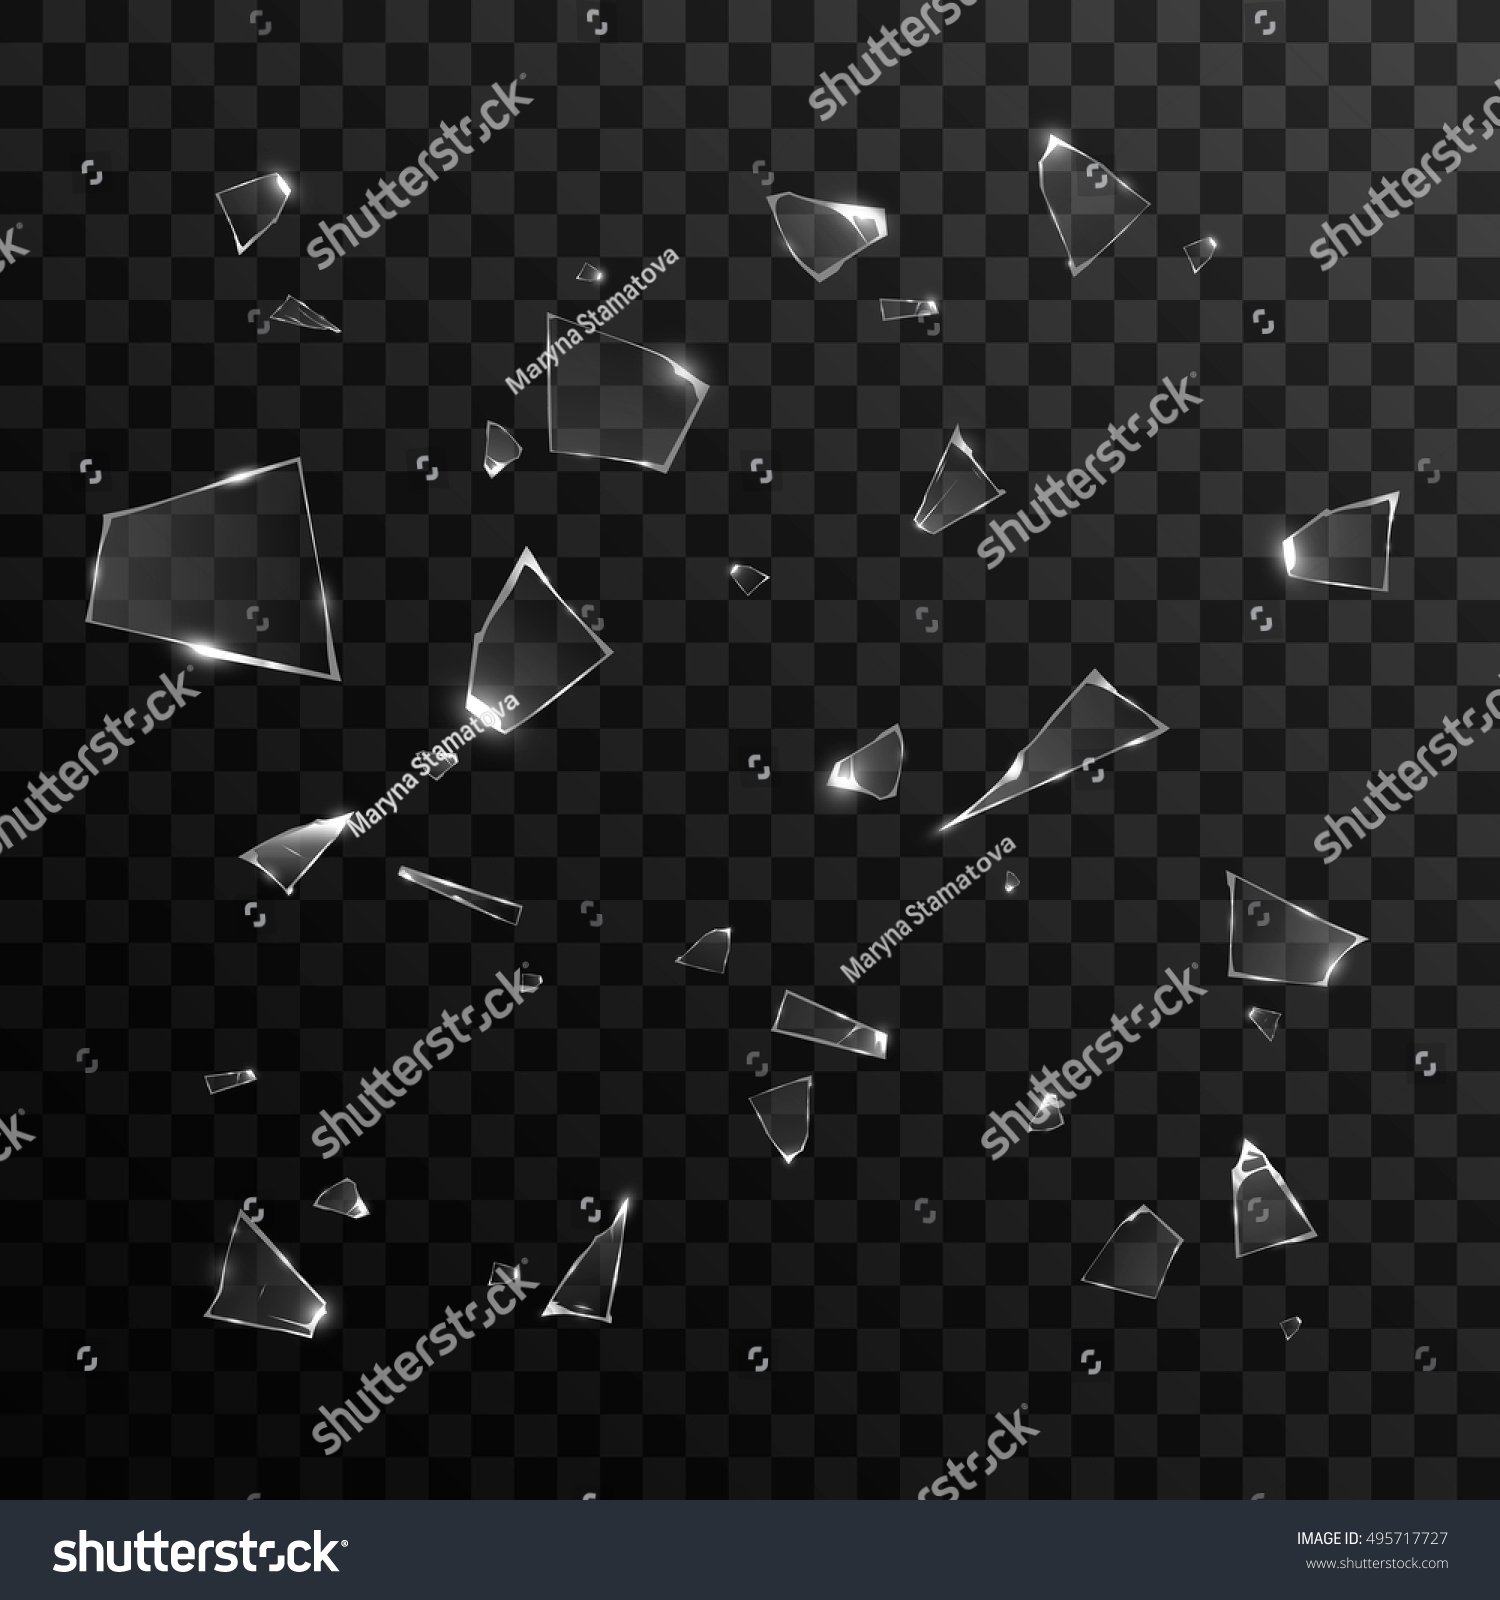 SVG of Broken glass pieces. Isolated on black transparent background. Vector illustration, eps 10. svg